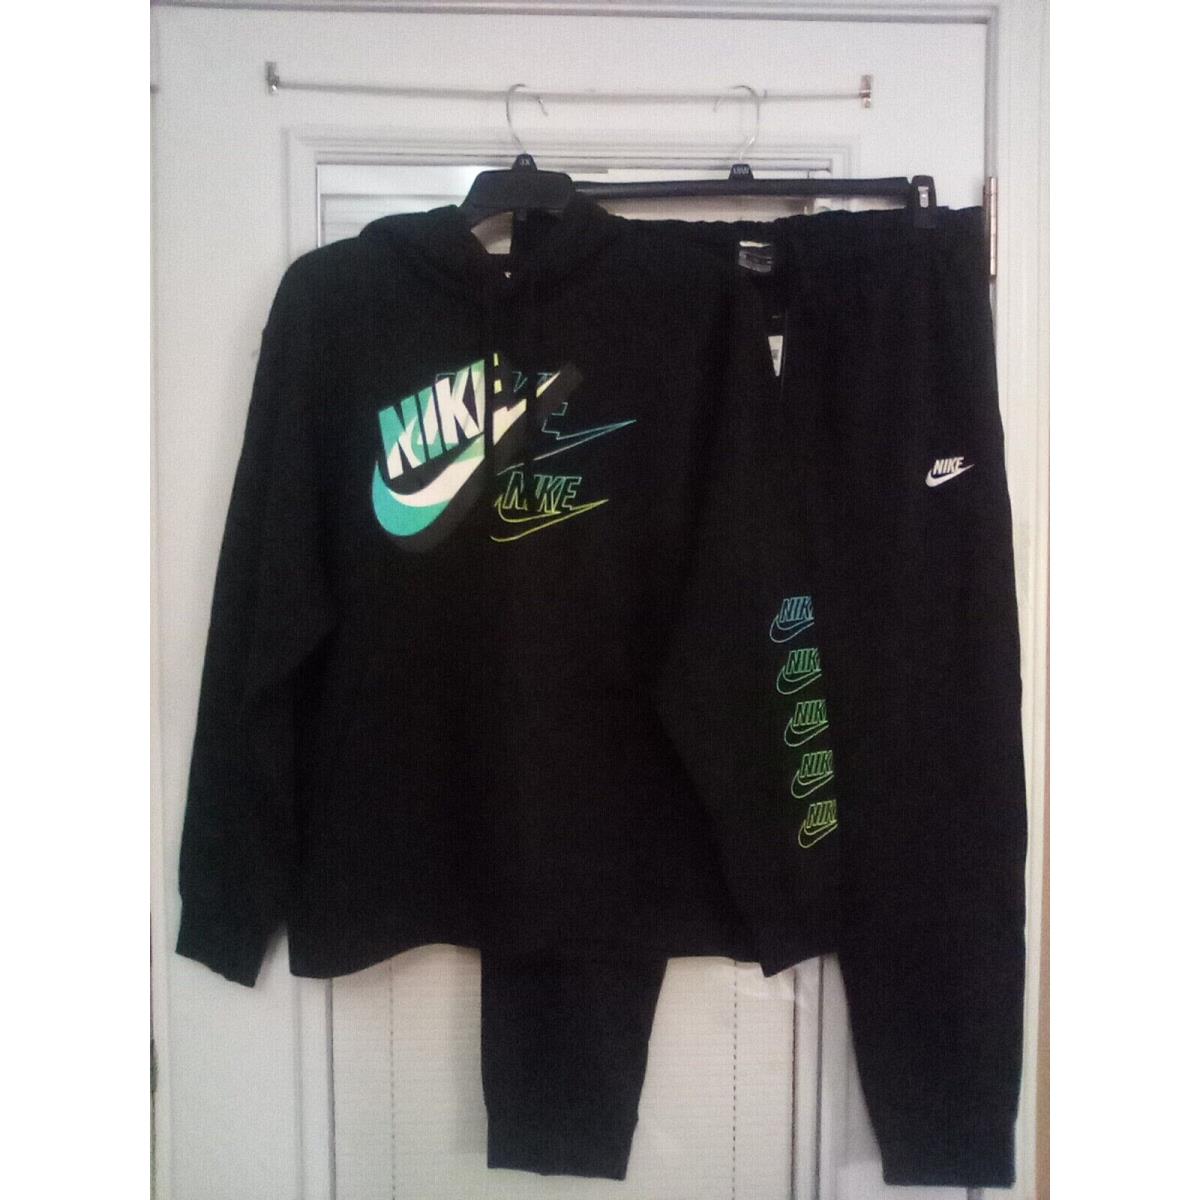 Nike Size XL Black/turquoise Sweatsuit